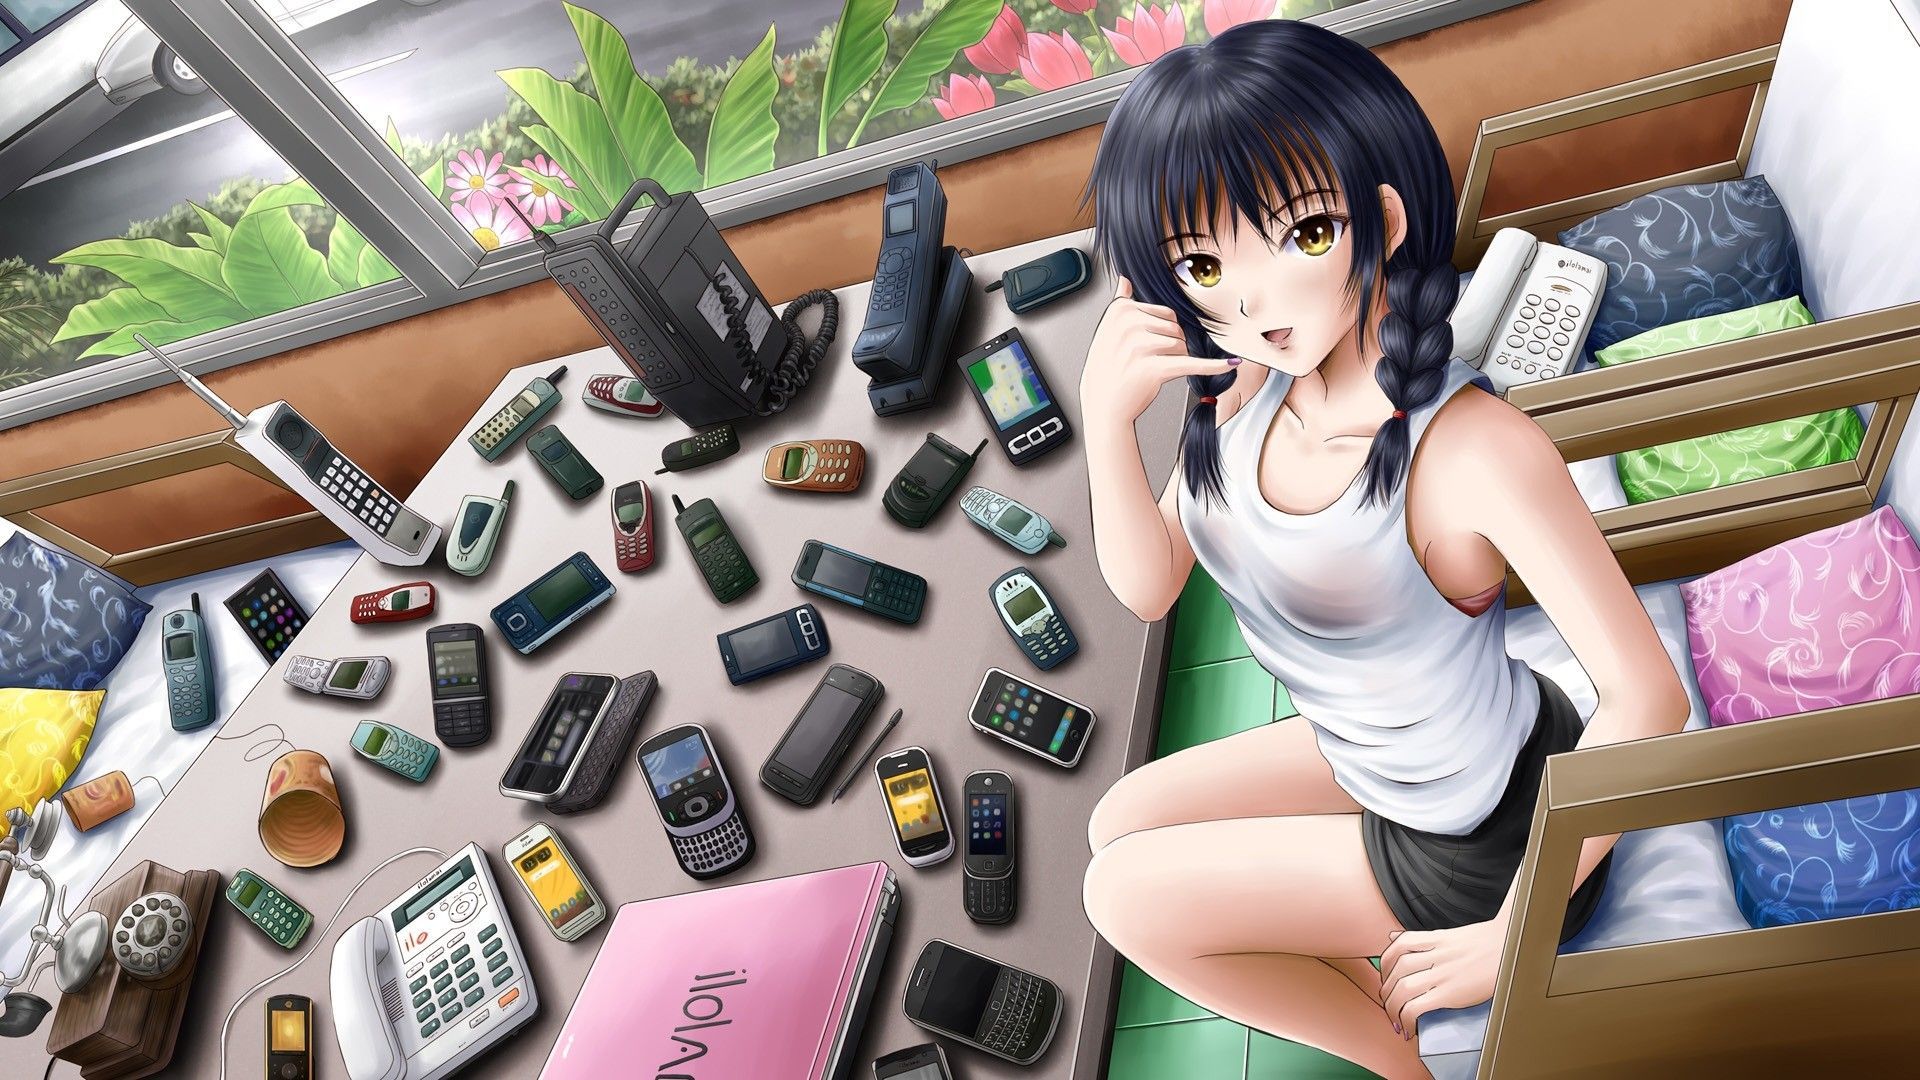 Download Wallpaper 1920x1080 Anime, Girl, Mobile phones Full HD ...